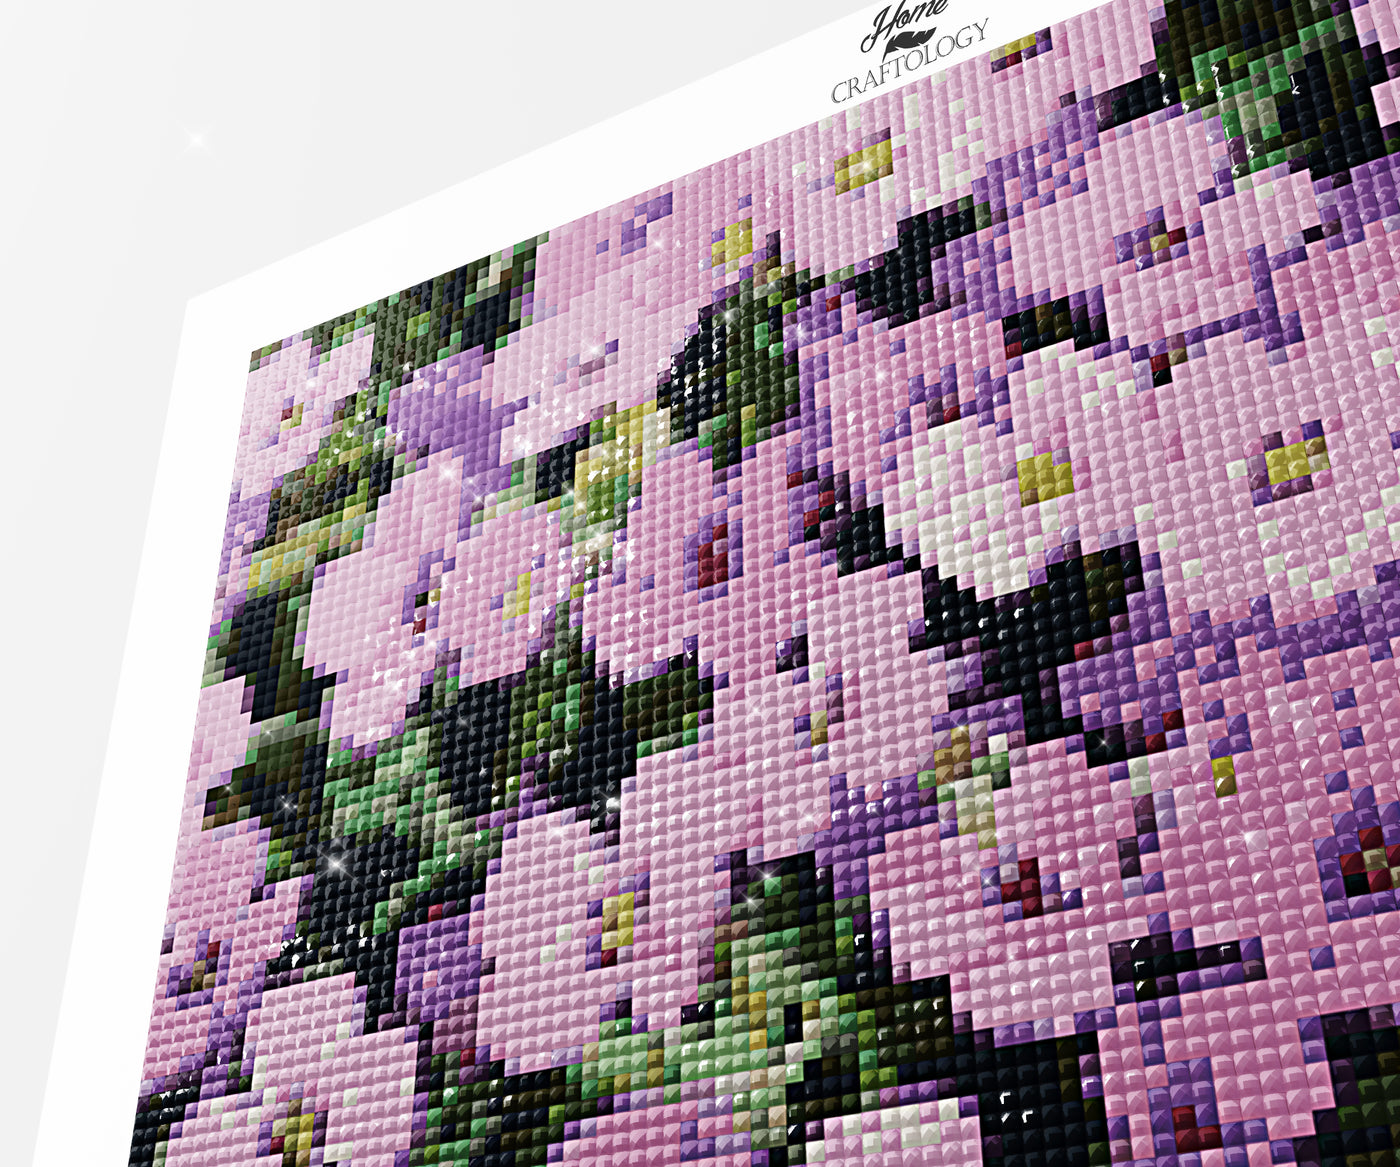 Field of Purple Flowers - Premium Diamond Painting Kit